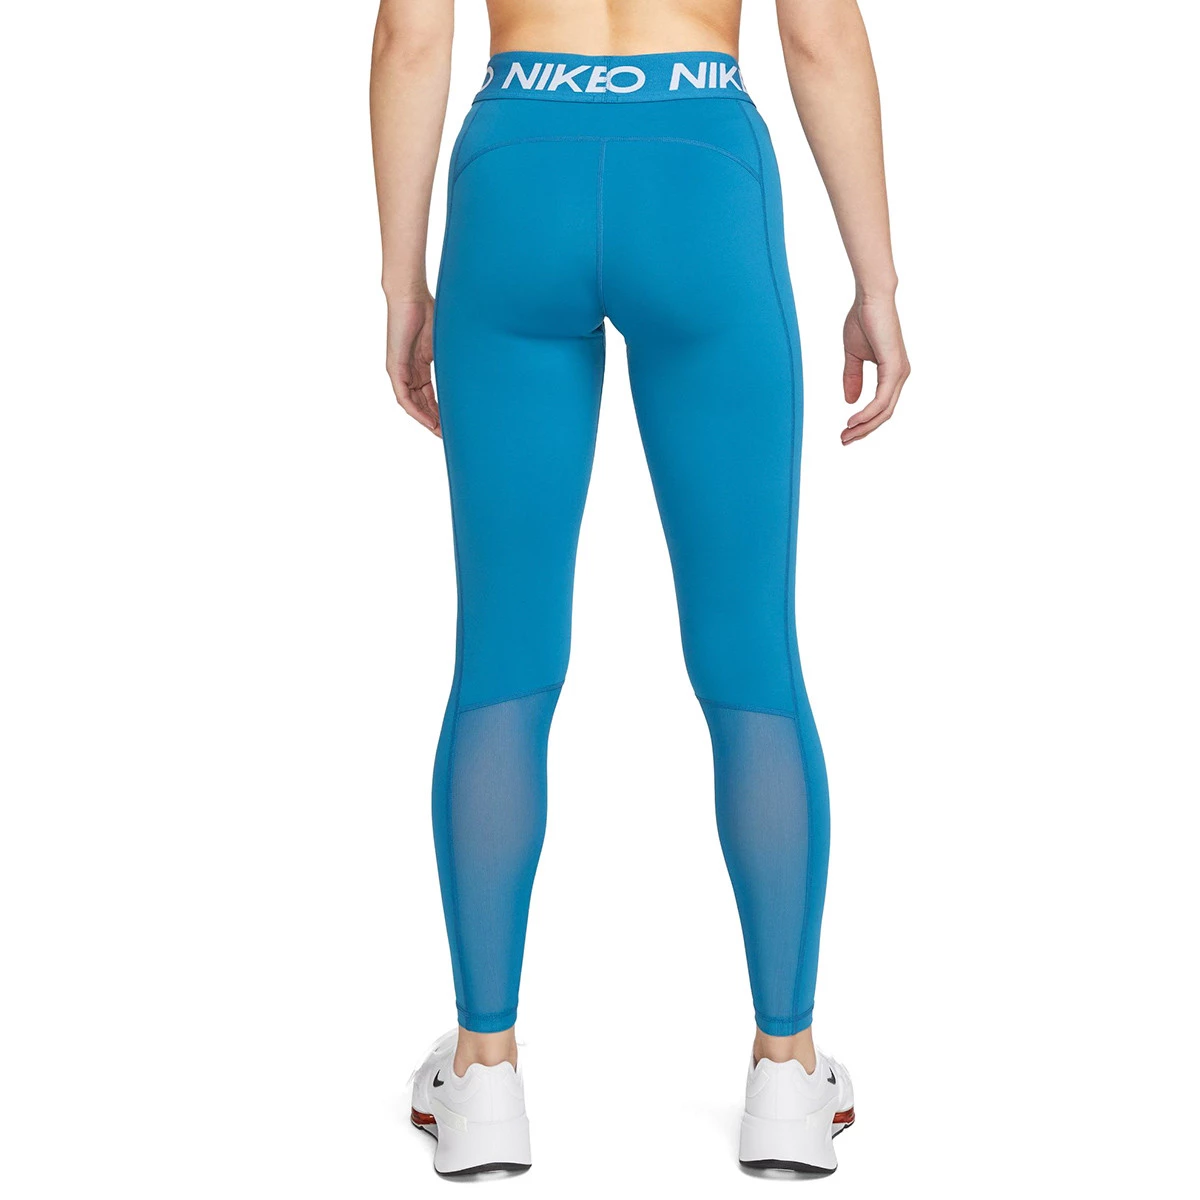 Sliders Nike Women Pro 365 Tight Industrial Blue-White - Fútbol